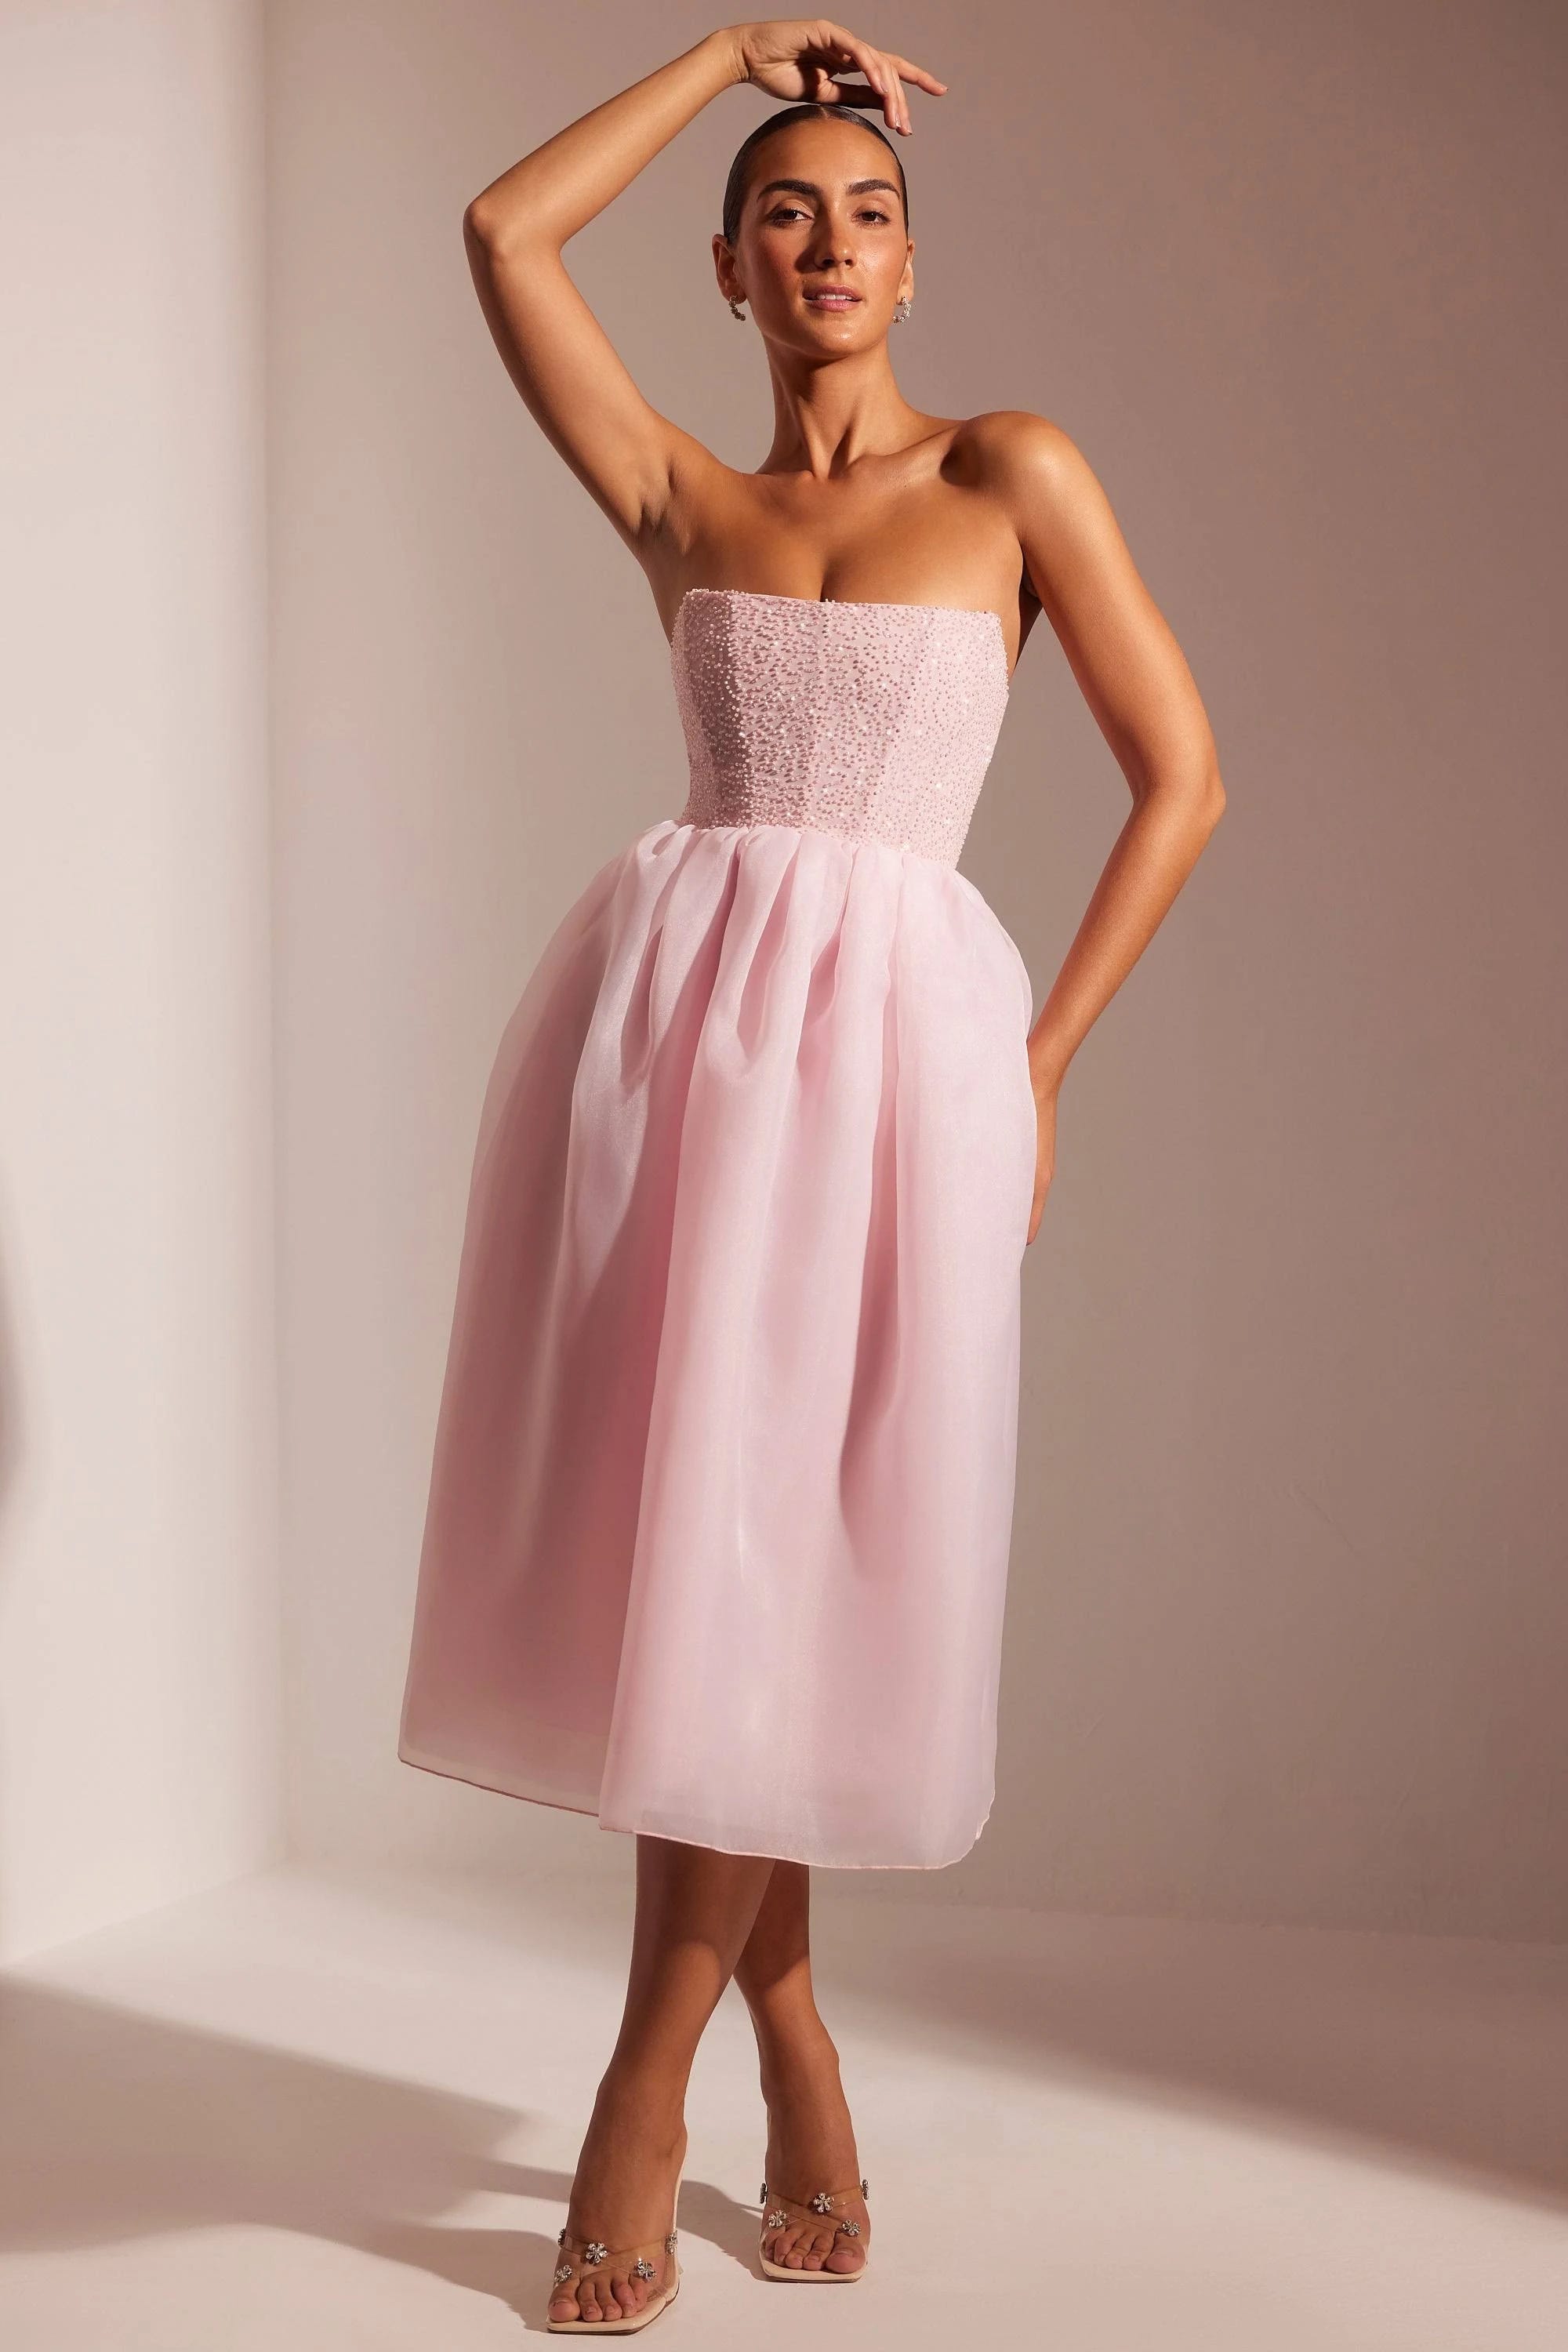 Elegant Rosette Midi Dress with Embellished Corset Skirt and Blush Colored Tone | Image